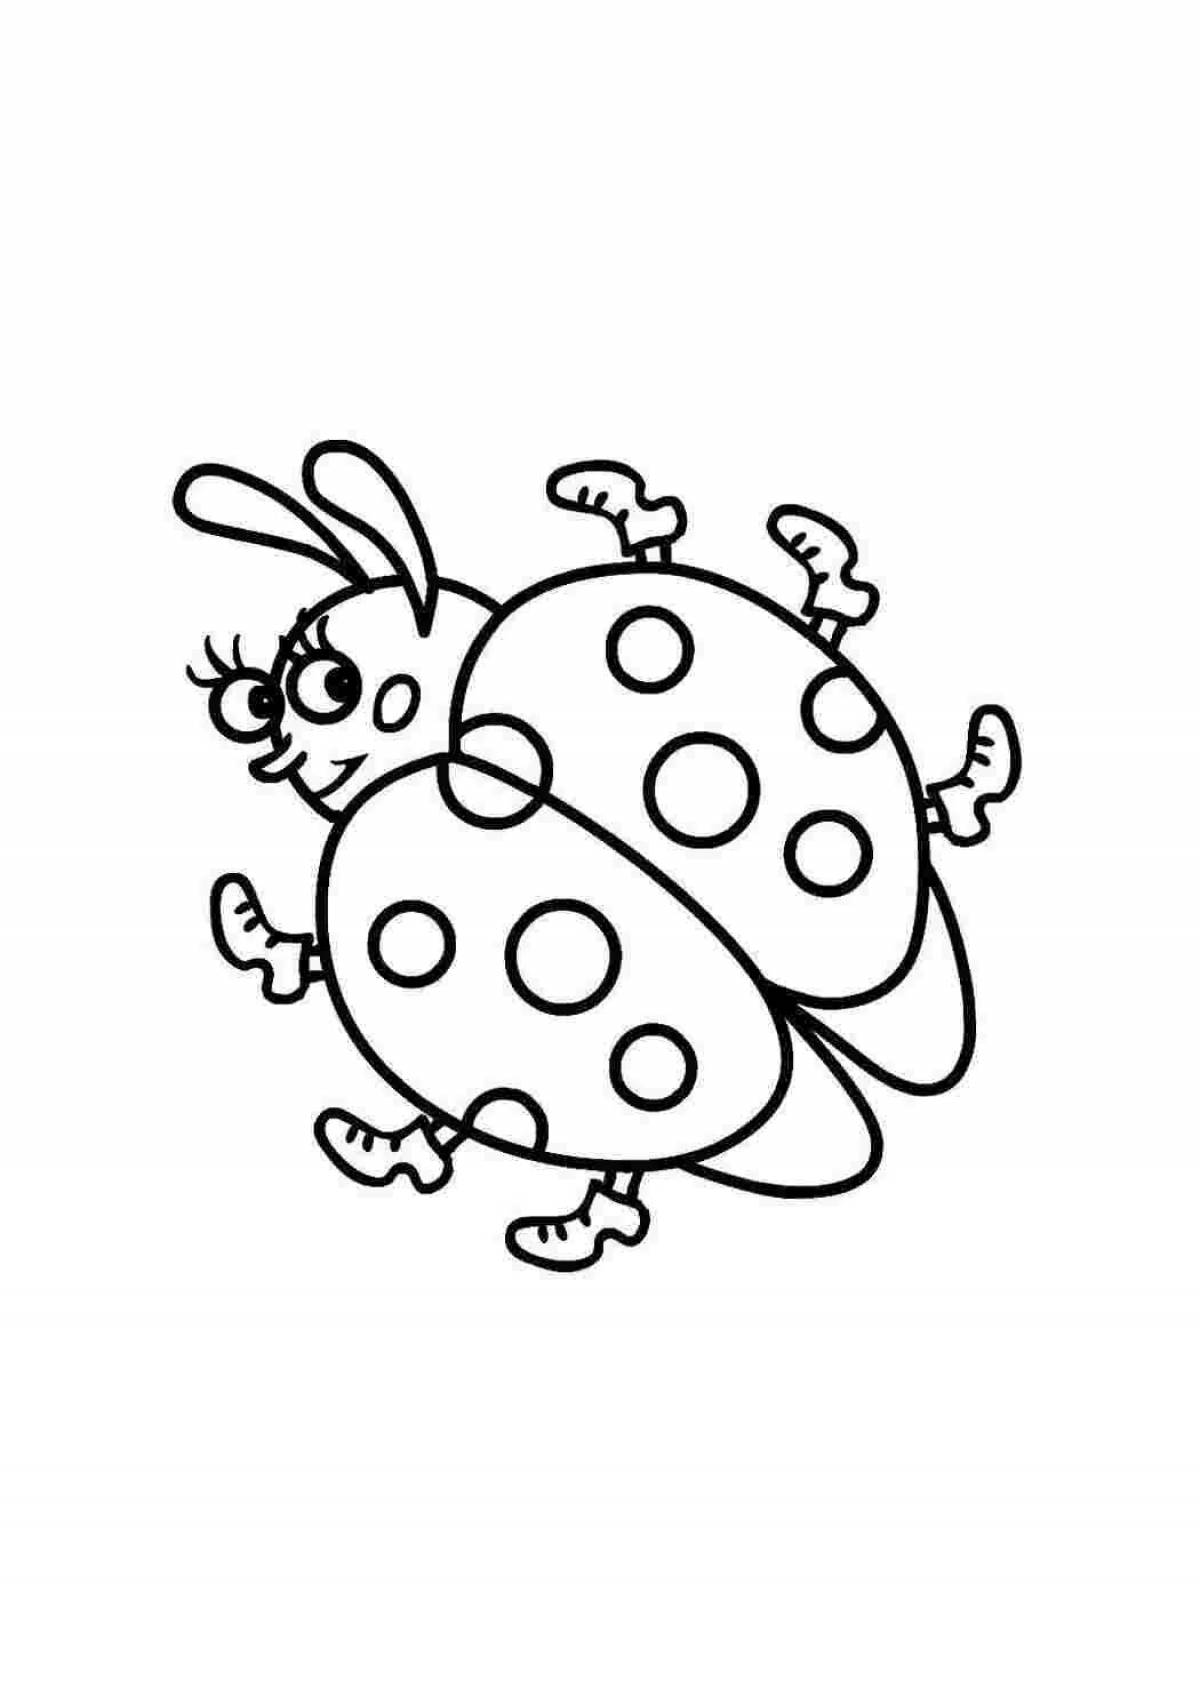 Amazing ladybug coloring book for kids